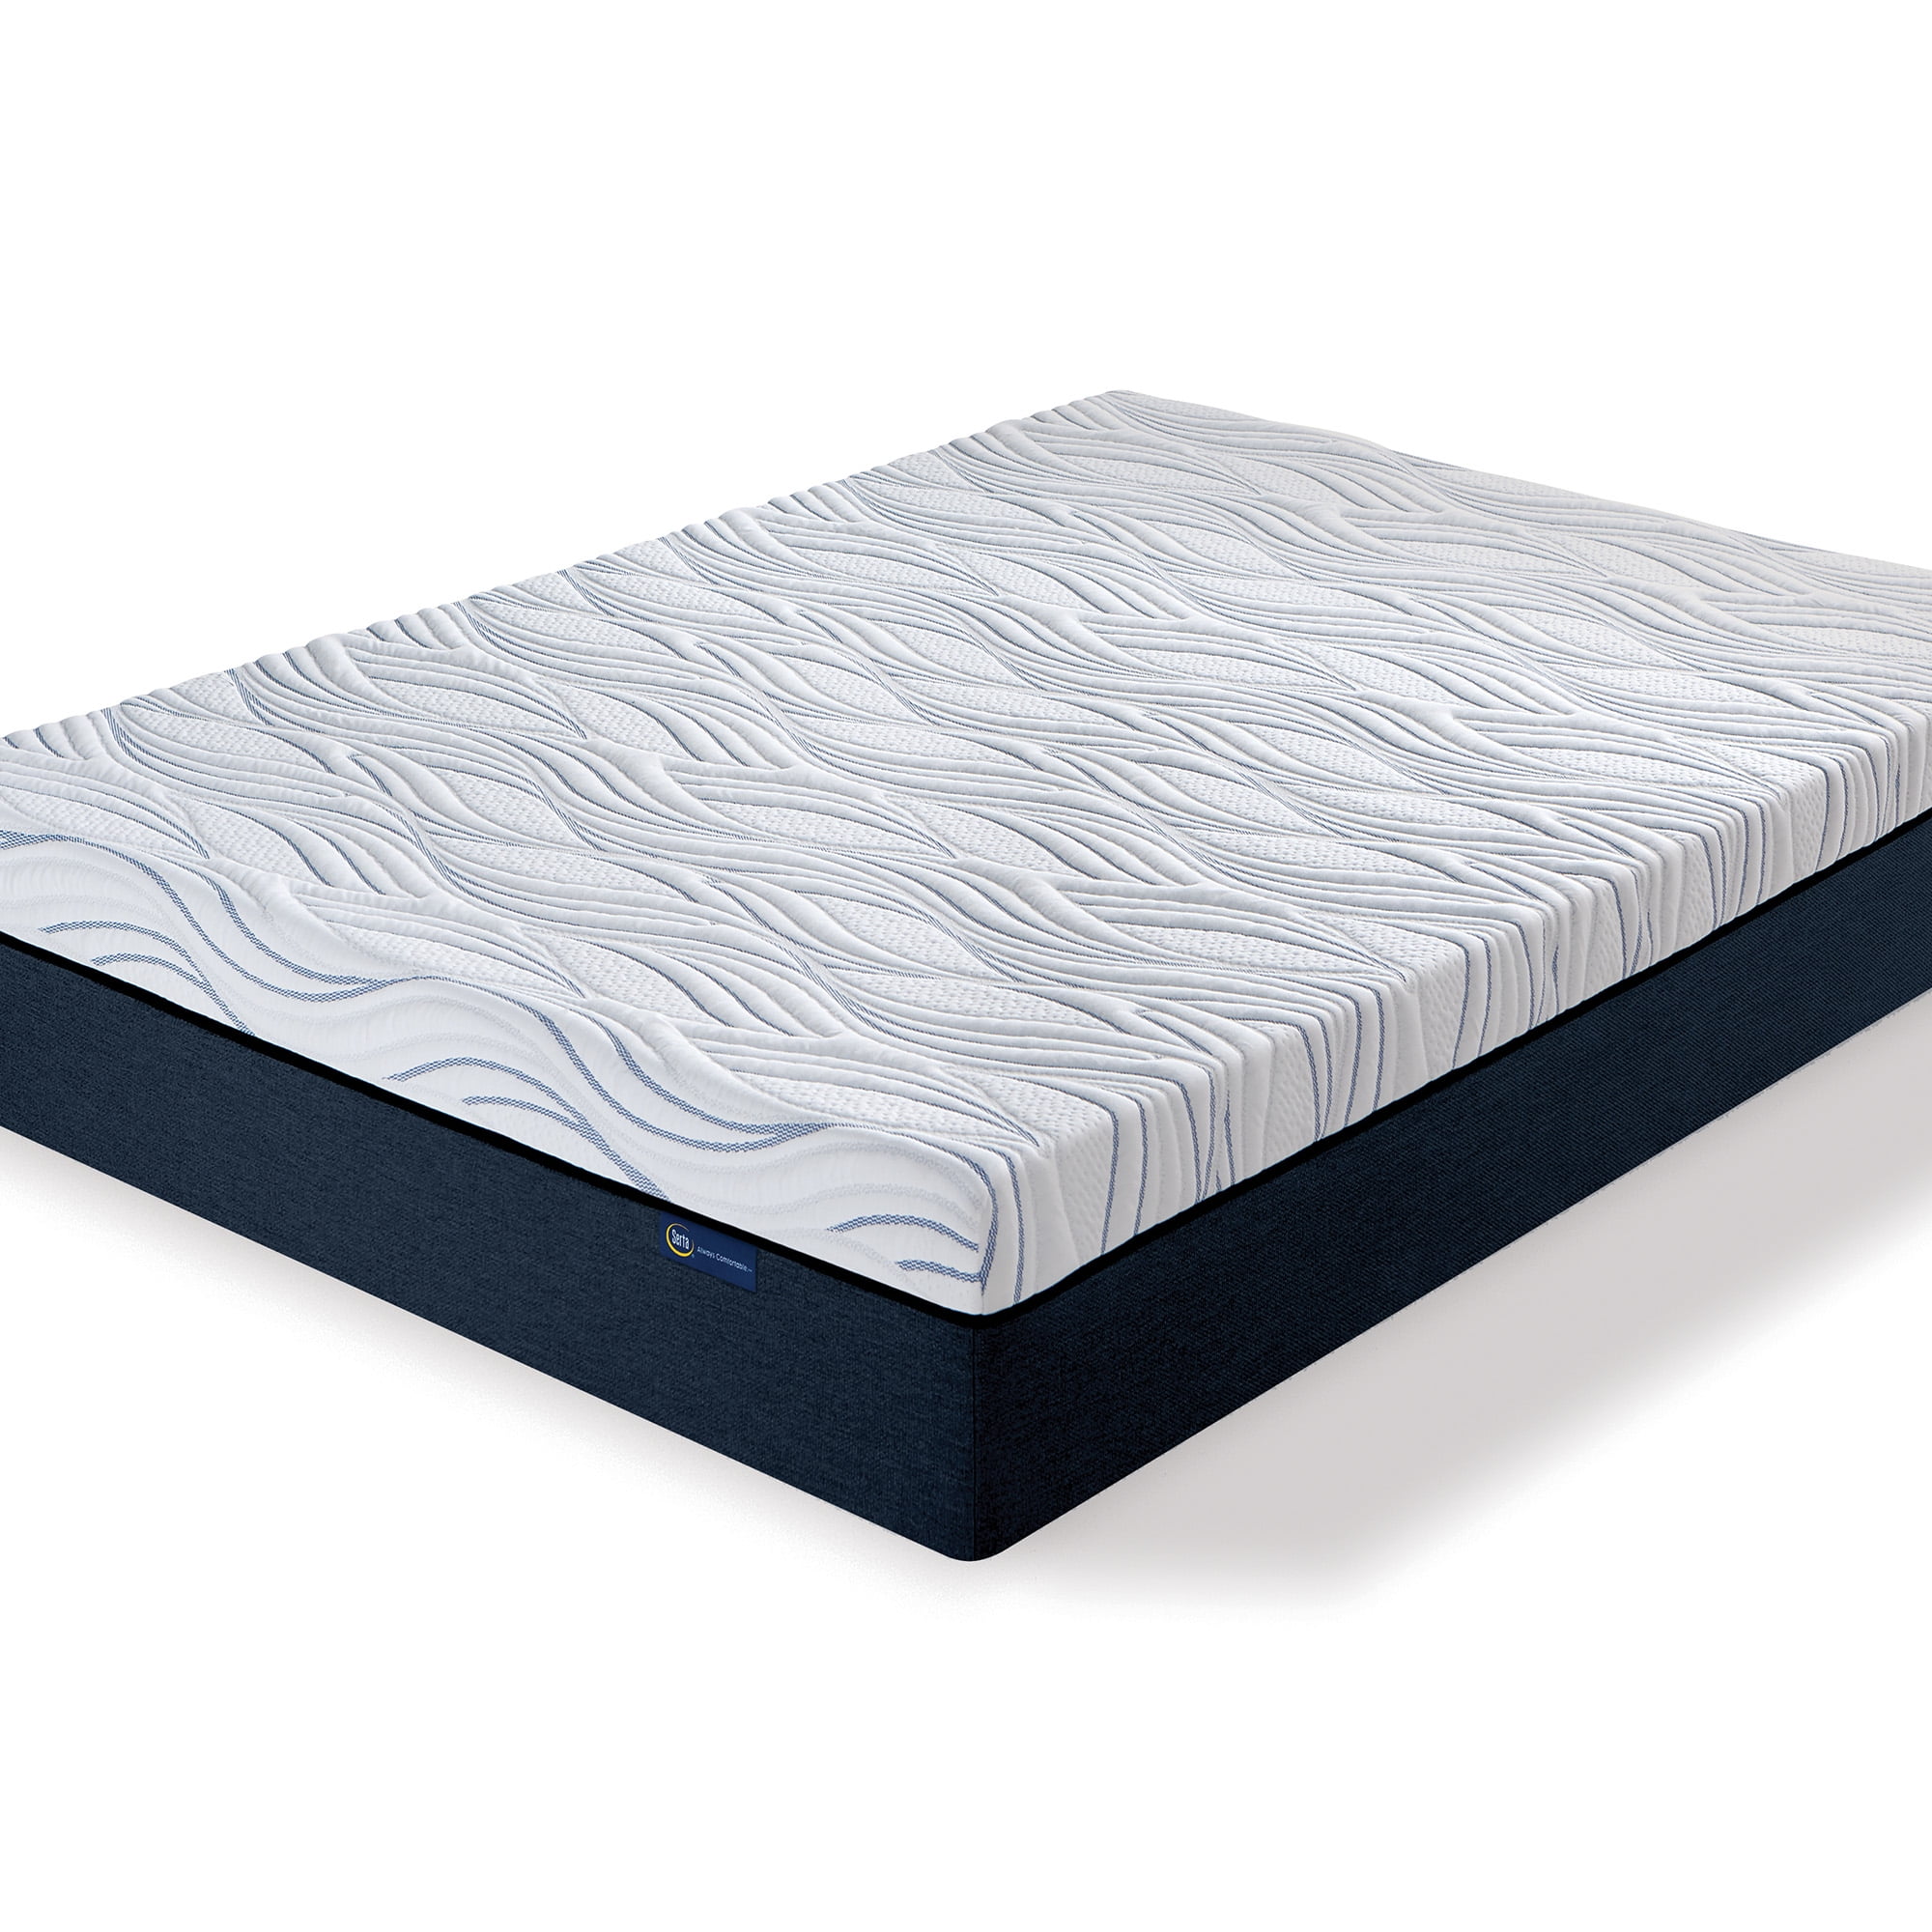 Serta Perfect Sleeper Splendid Slumber 12 inch Medium Gel Memory Foam Mattress, Size: Twin